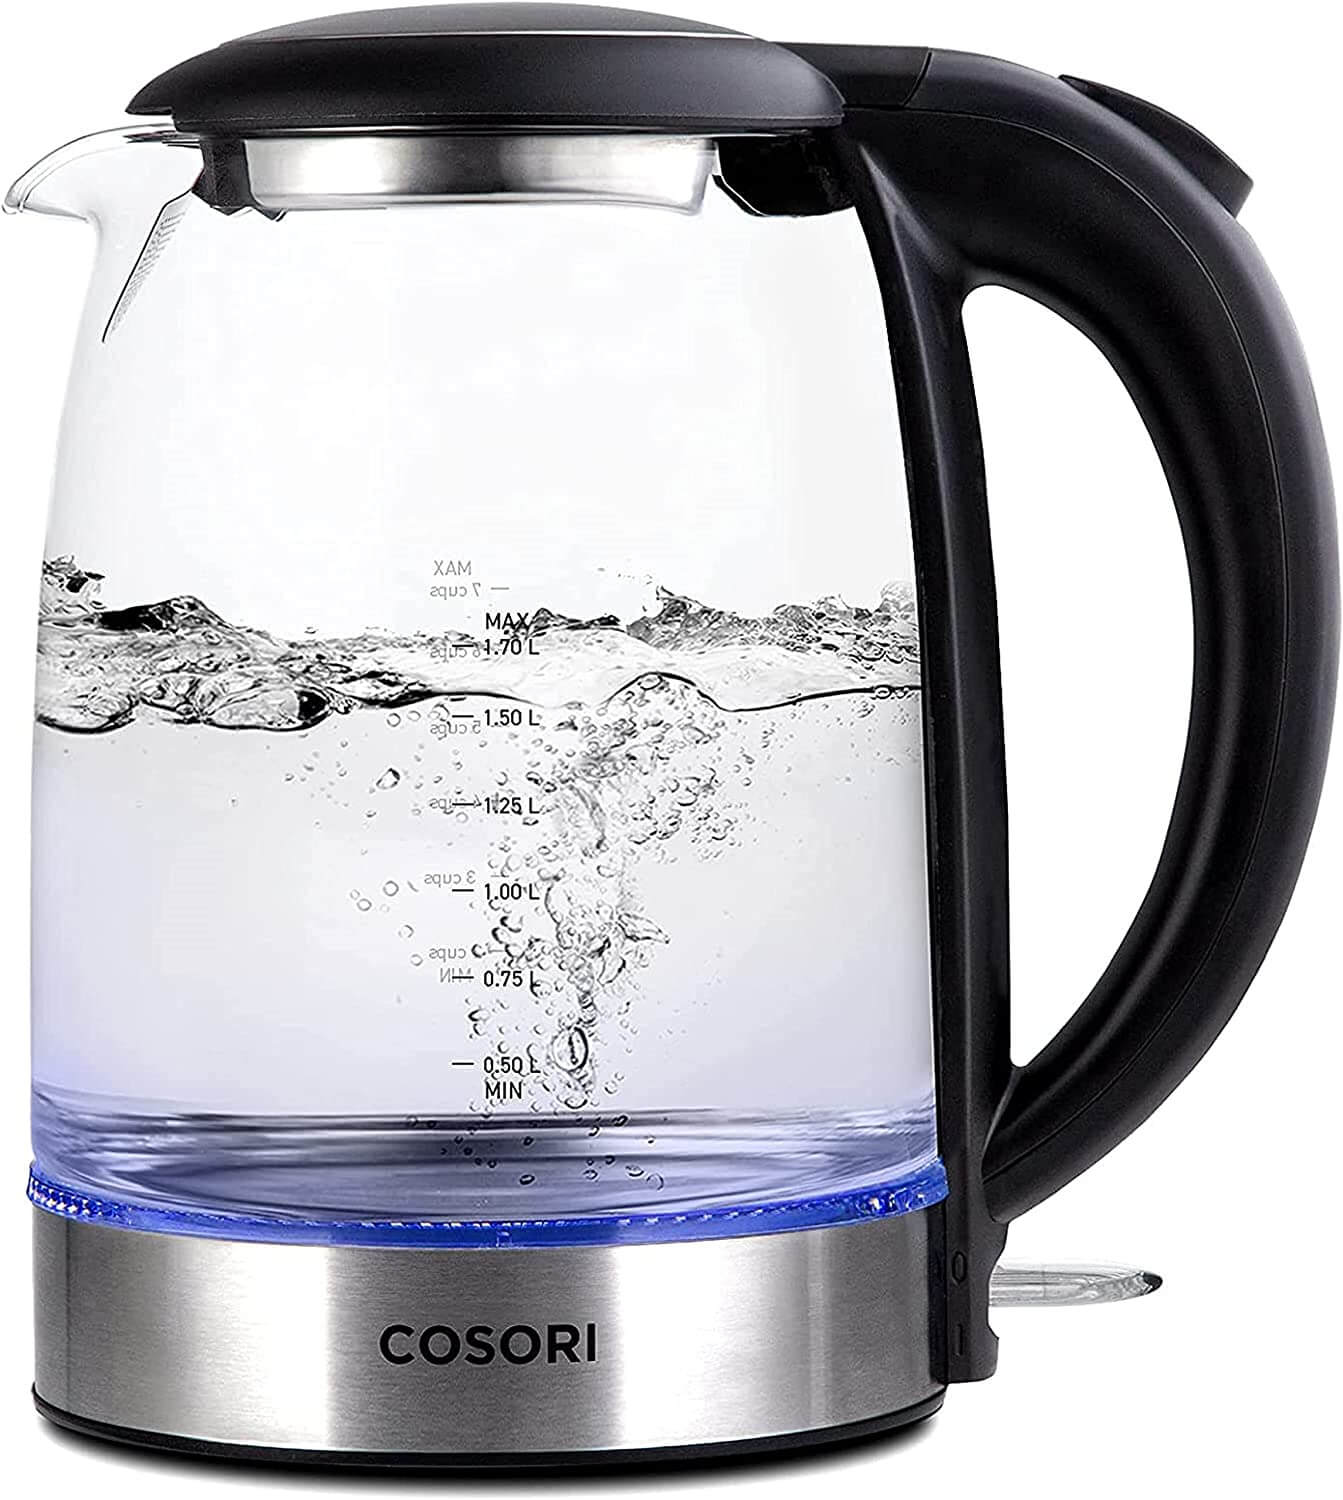 bubbling water inside glass electric kettle